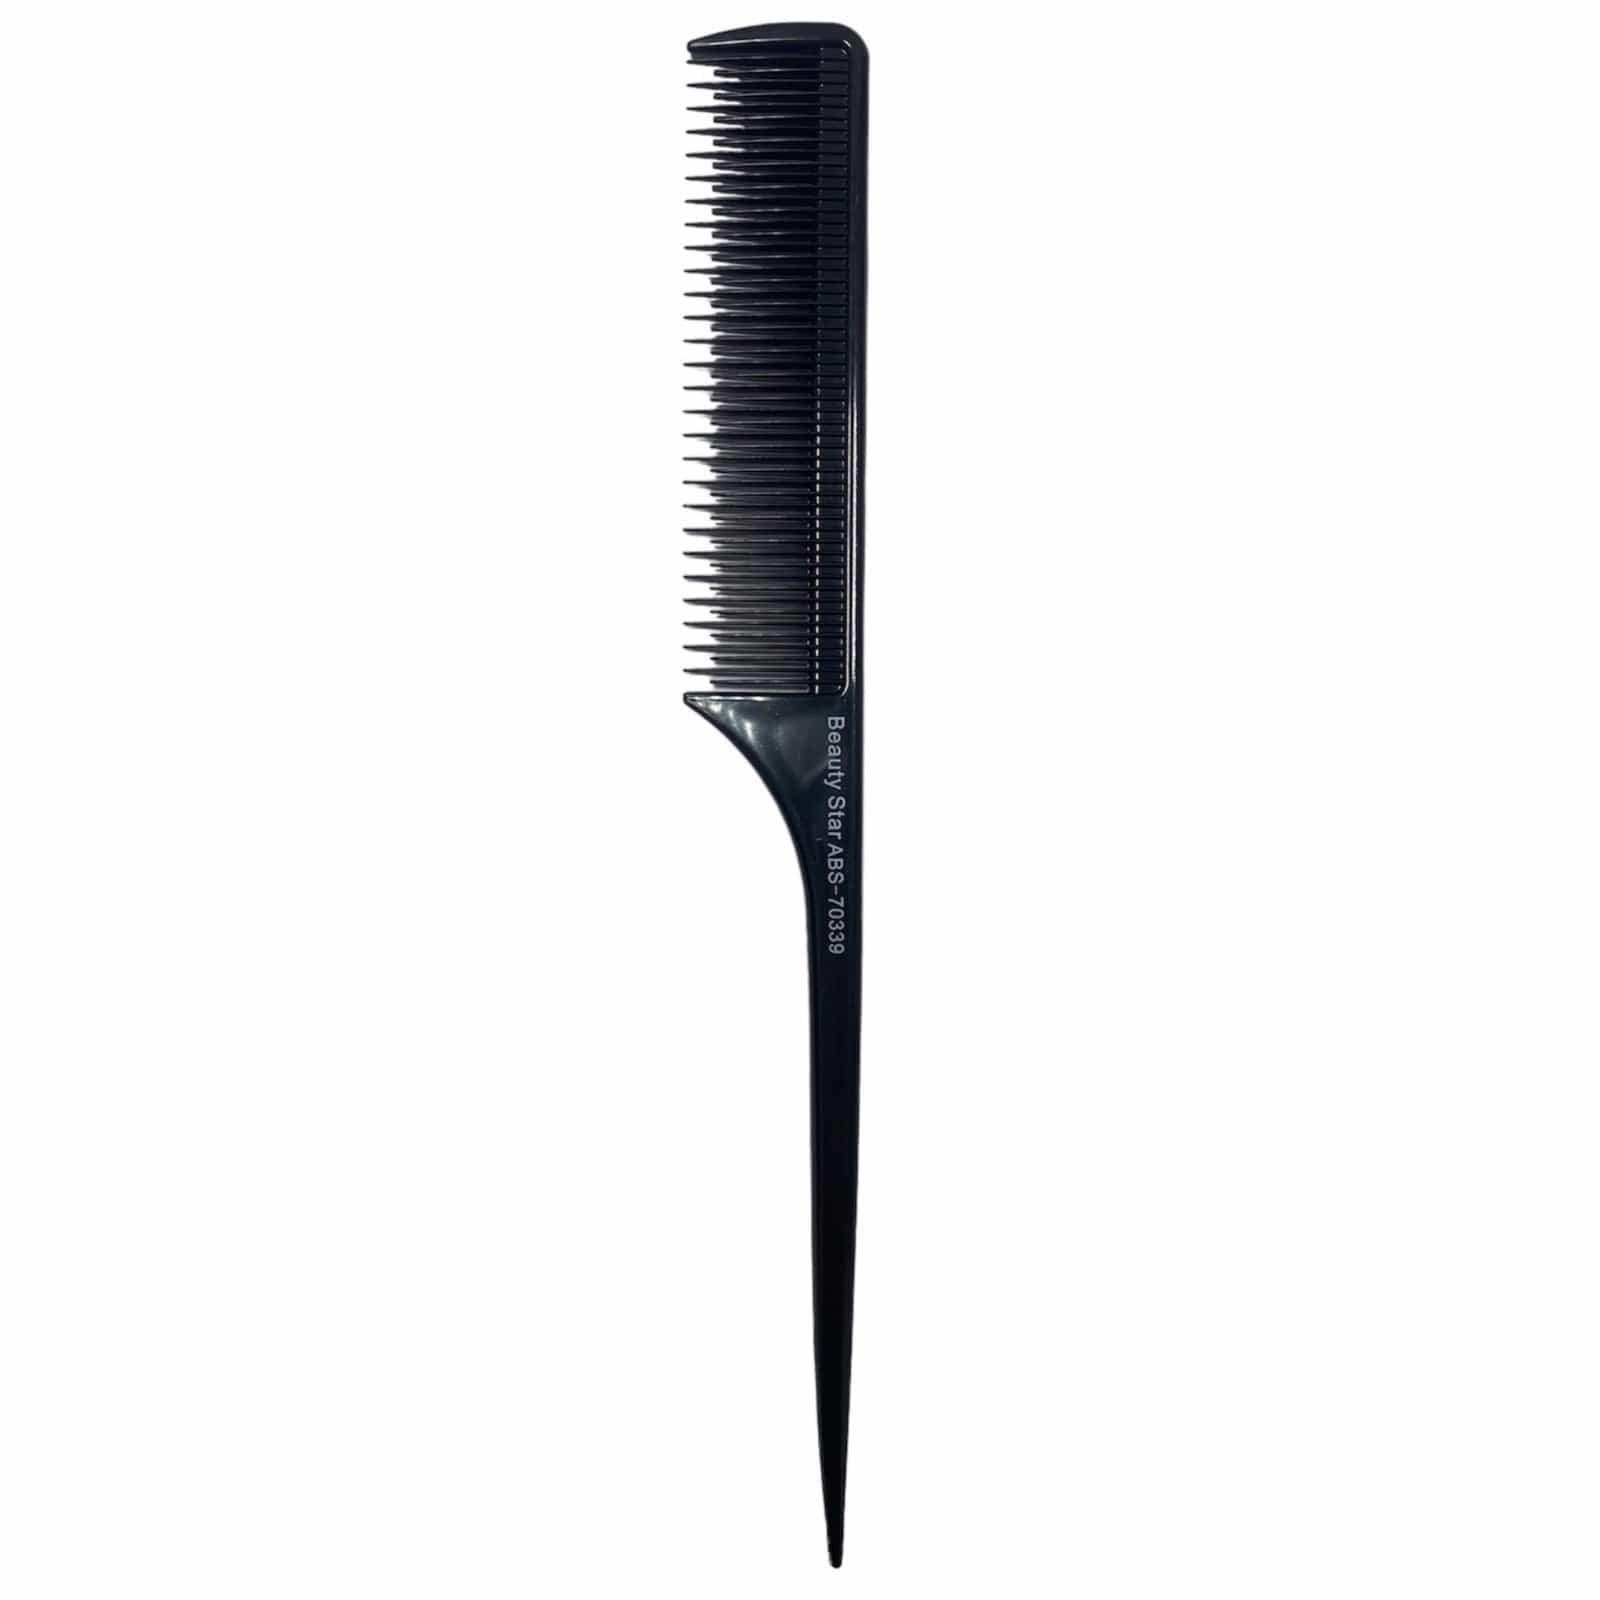 Beautystar Alternate Teeth Tail Comb ABS-70339